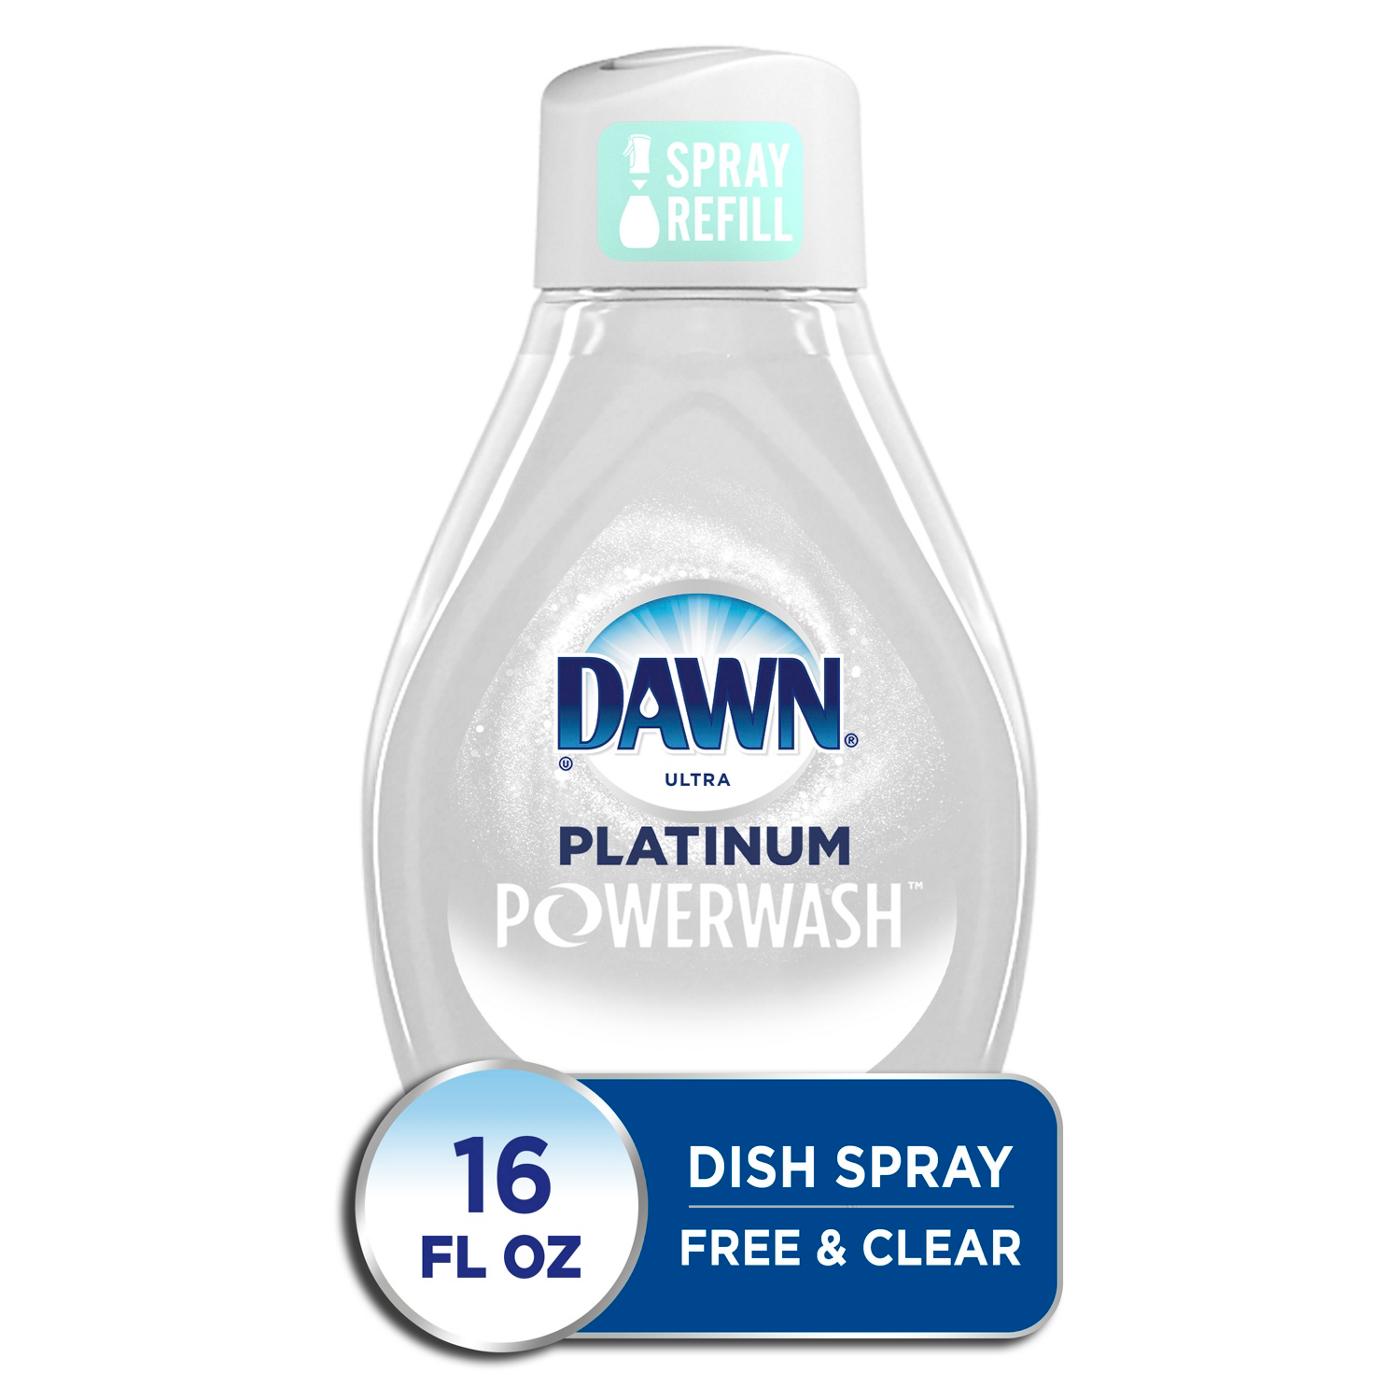 Dawn Platinum Powerwash Free & Clear Dish Spray Refill; image 3 of 3